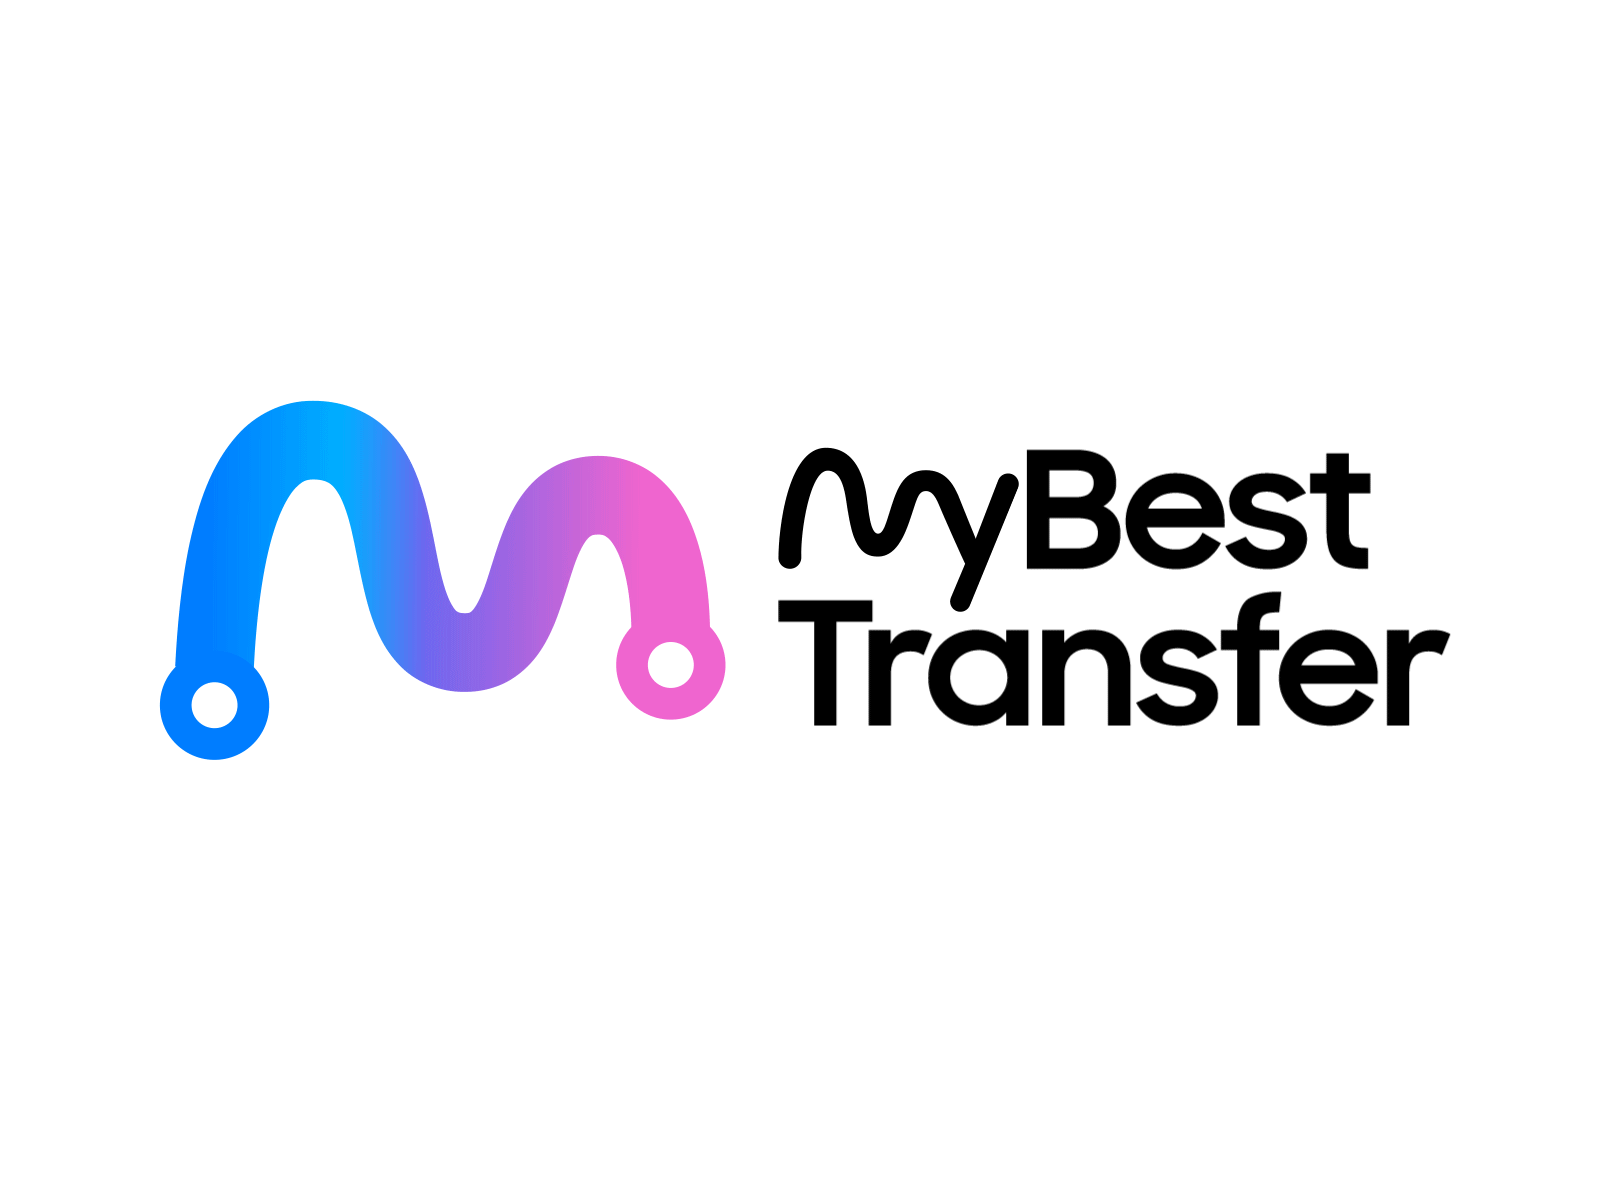 My best transfer logo animation